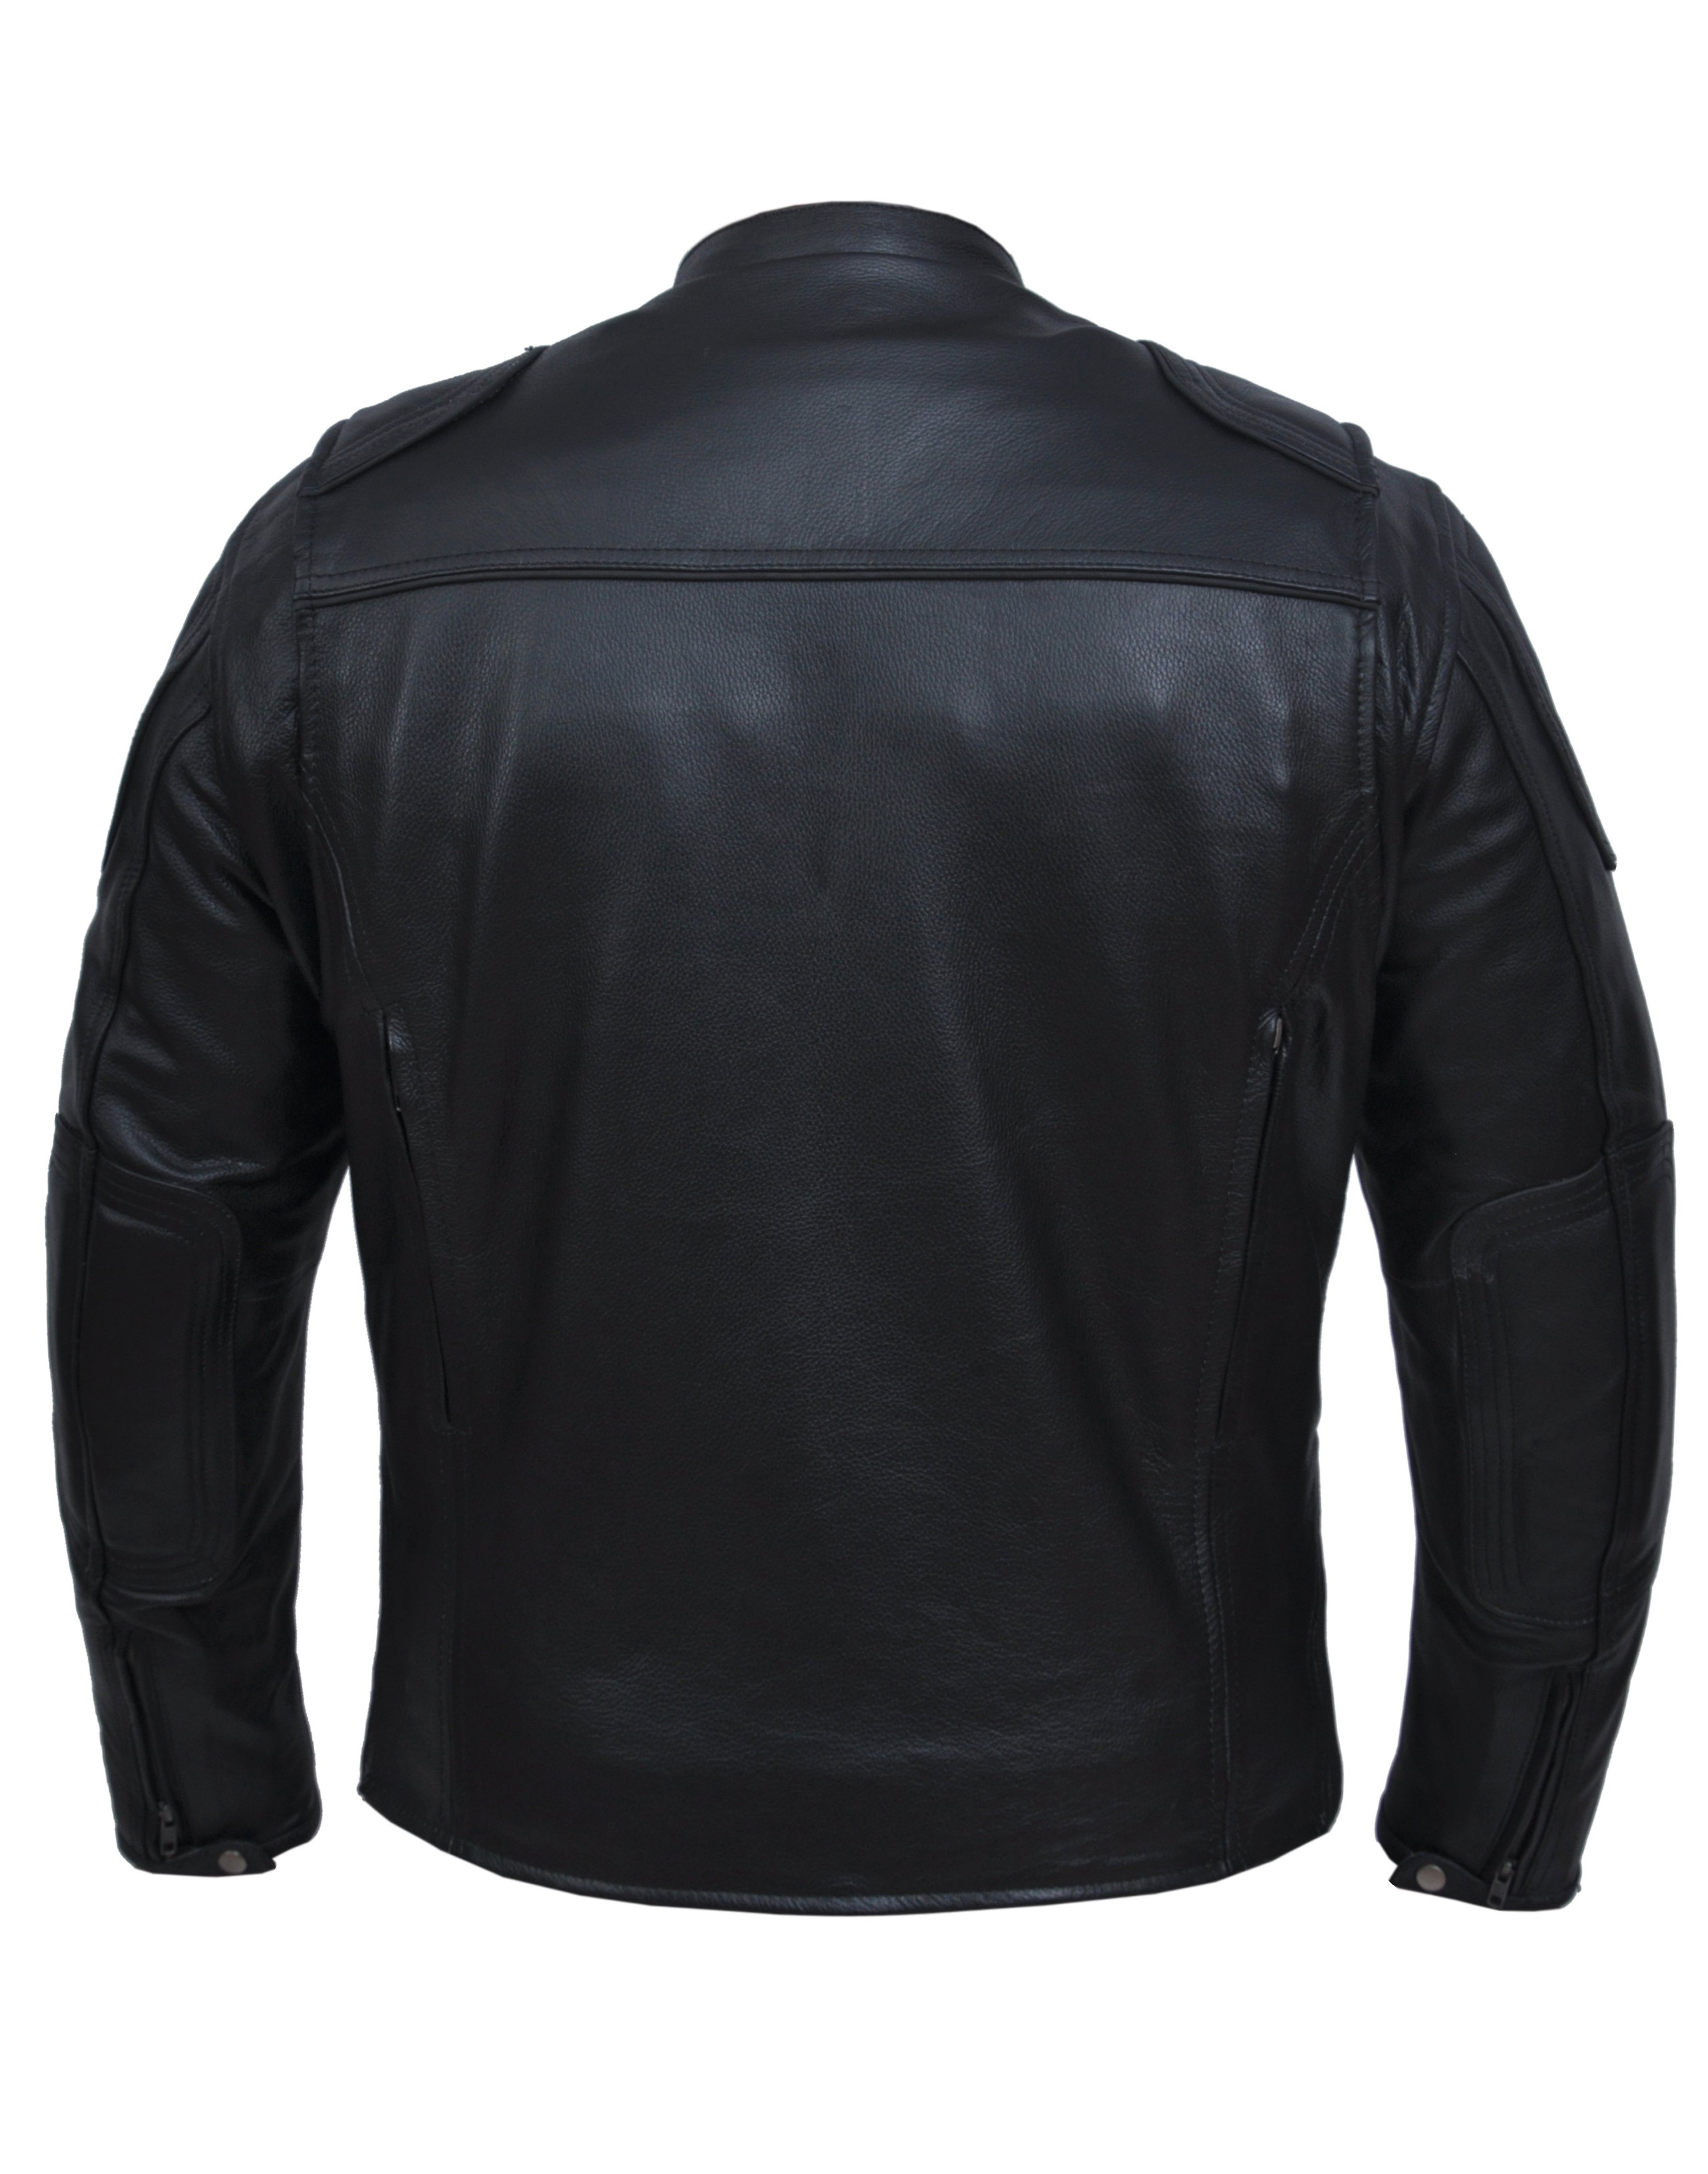 UNIK Men's Premium Leather Motorcycle Jacket 2 - Ghost Rider Leather